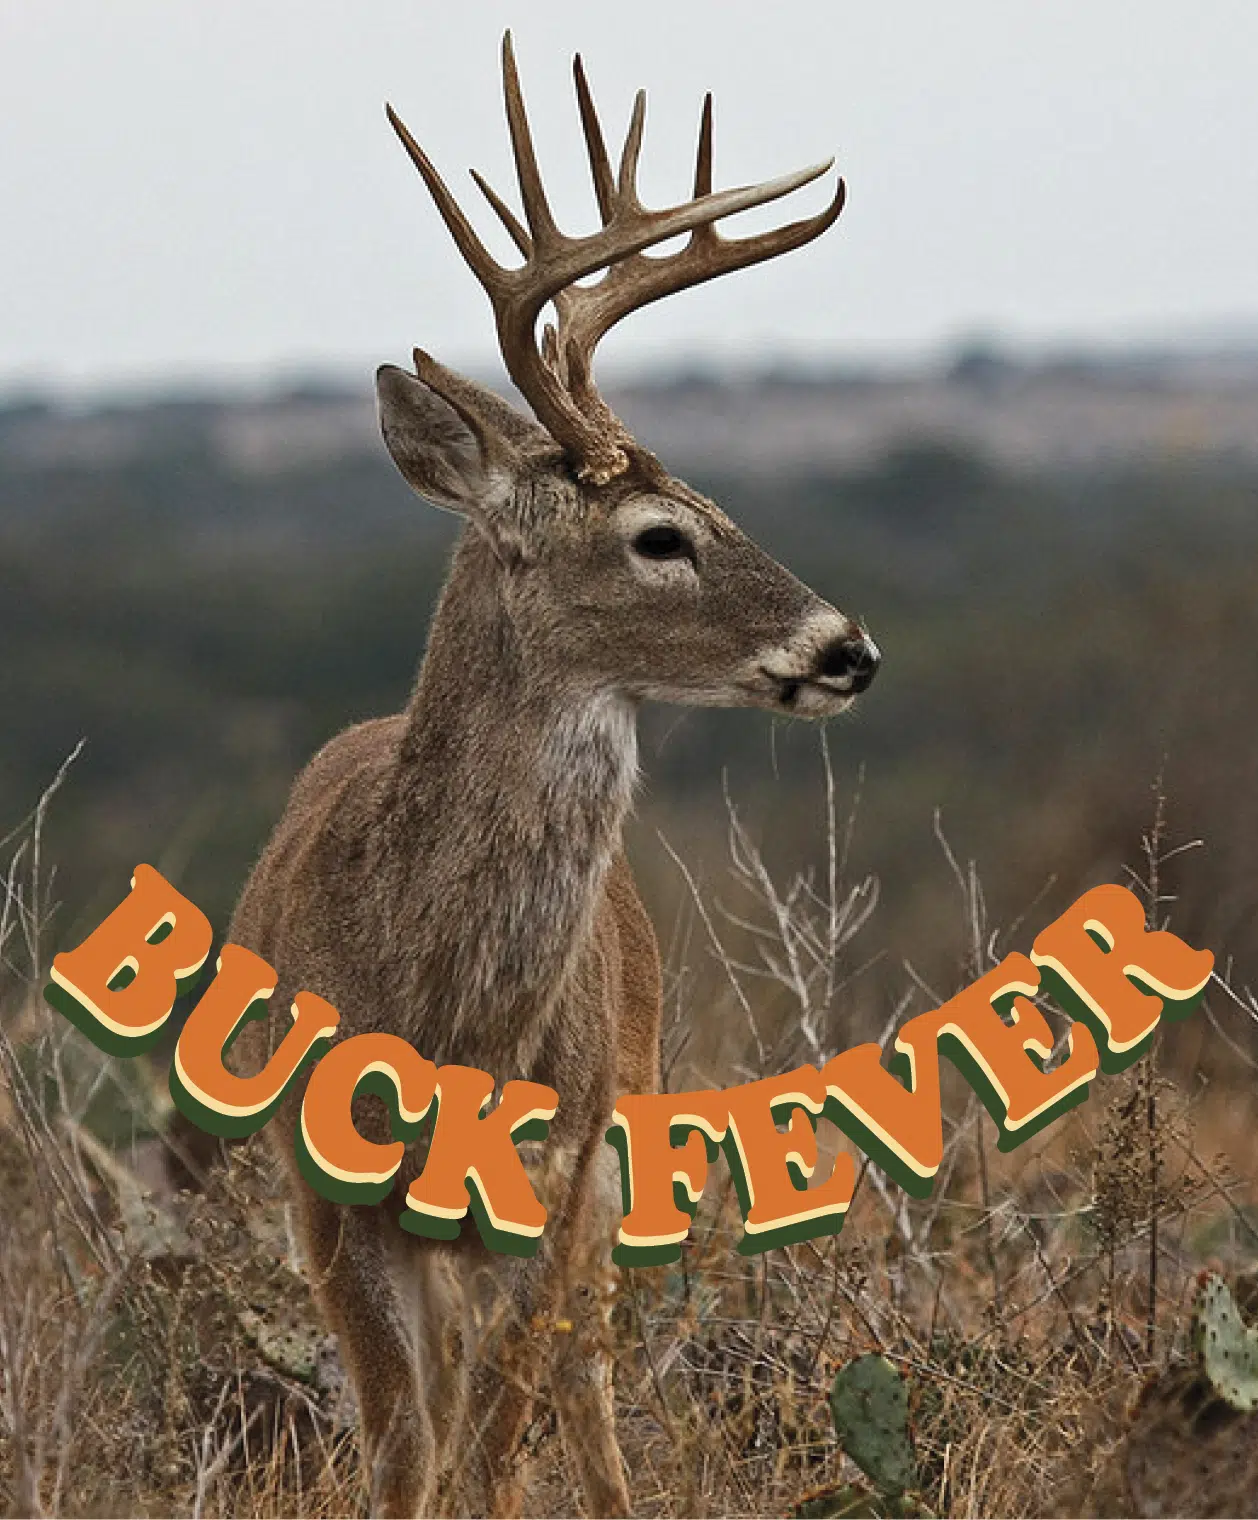 Buck Fever reaches $1 million milestone | Seguin Today